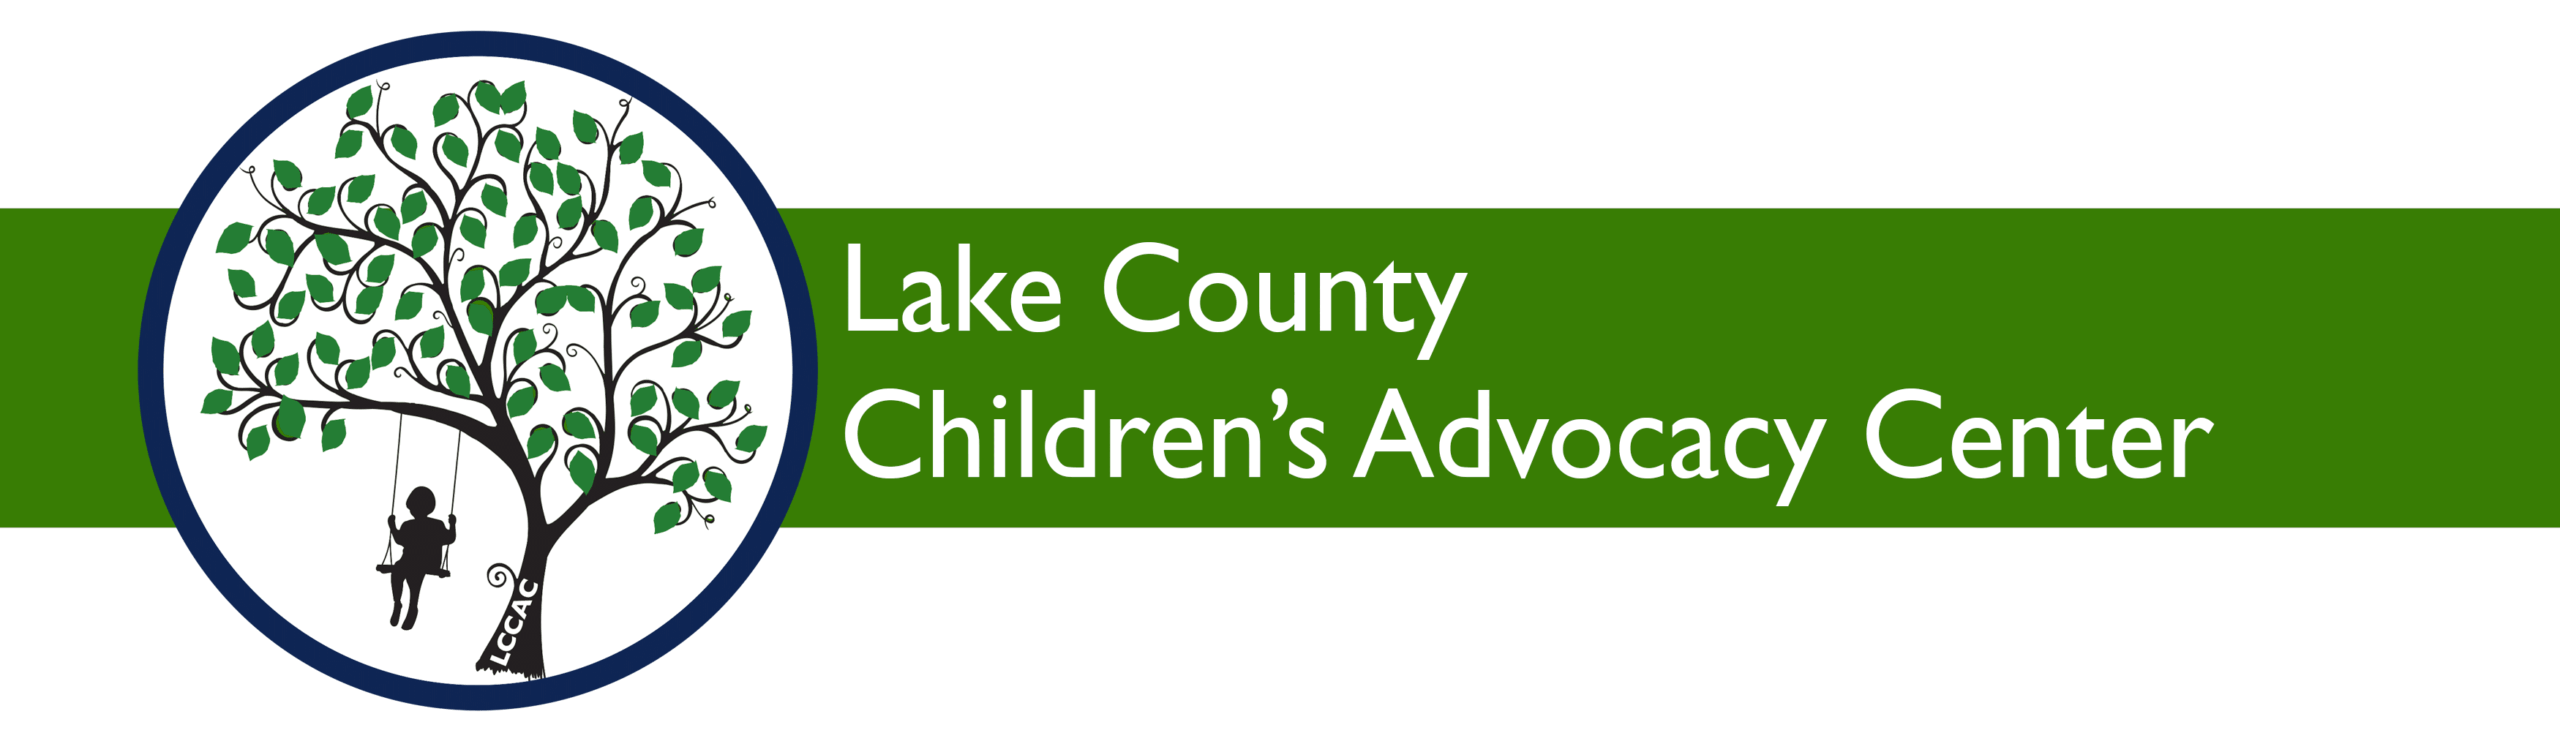 Lake County Children's Advocacy Center